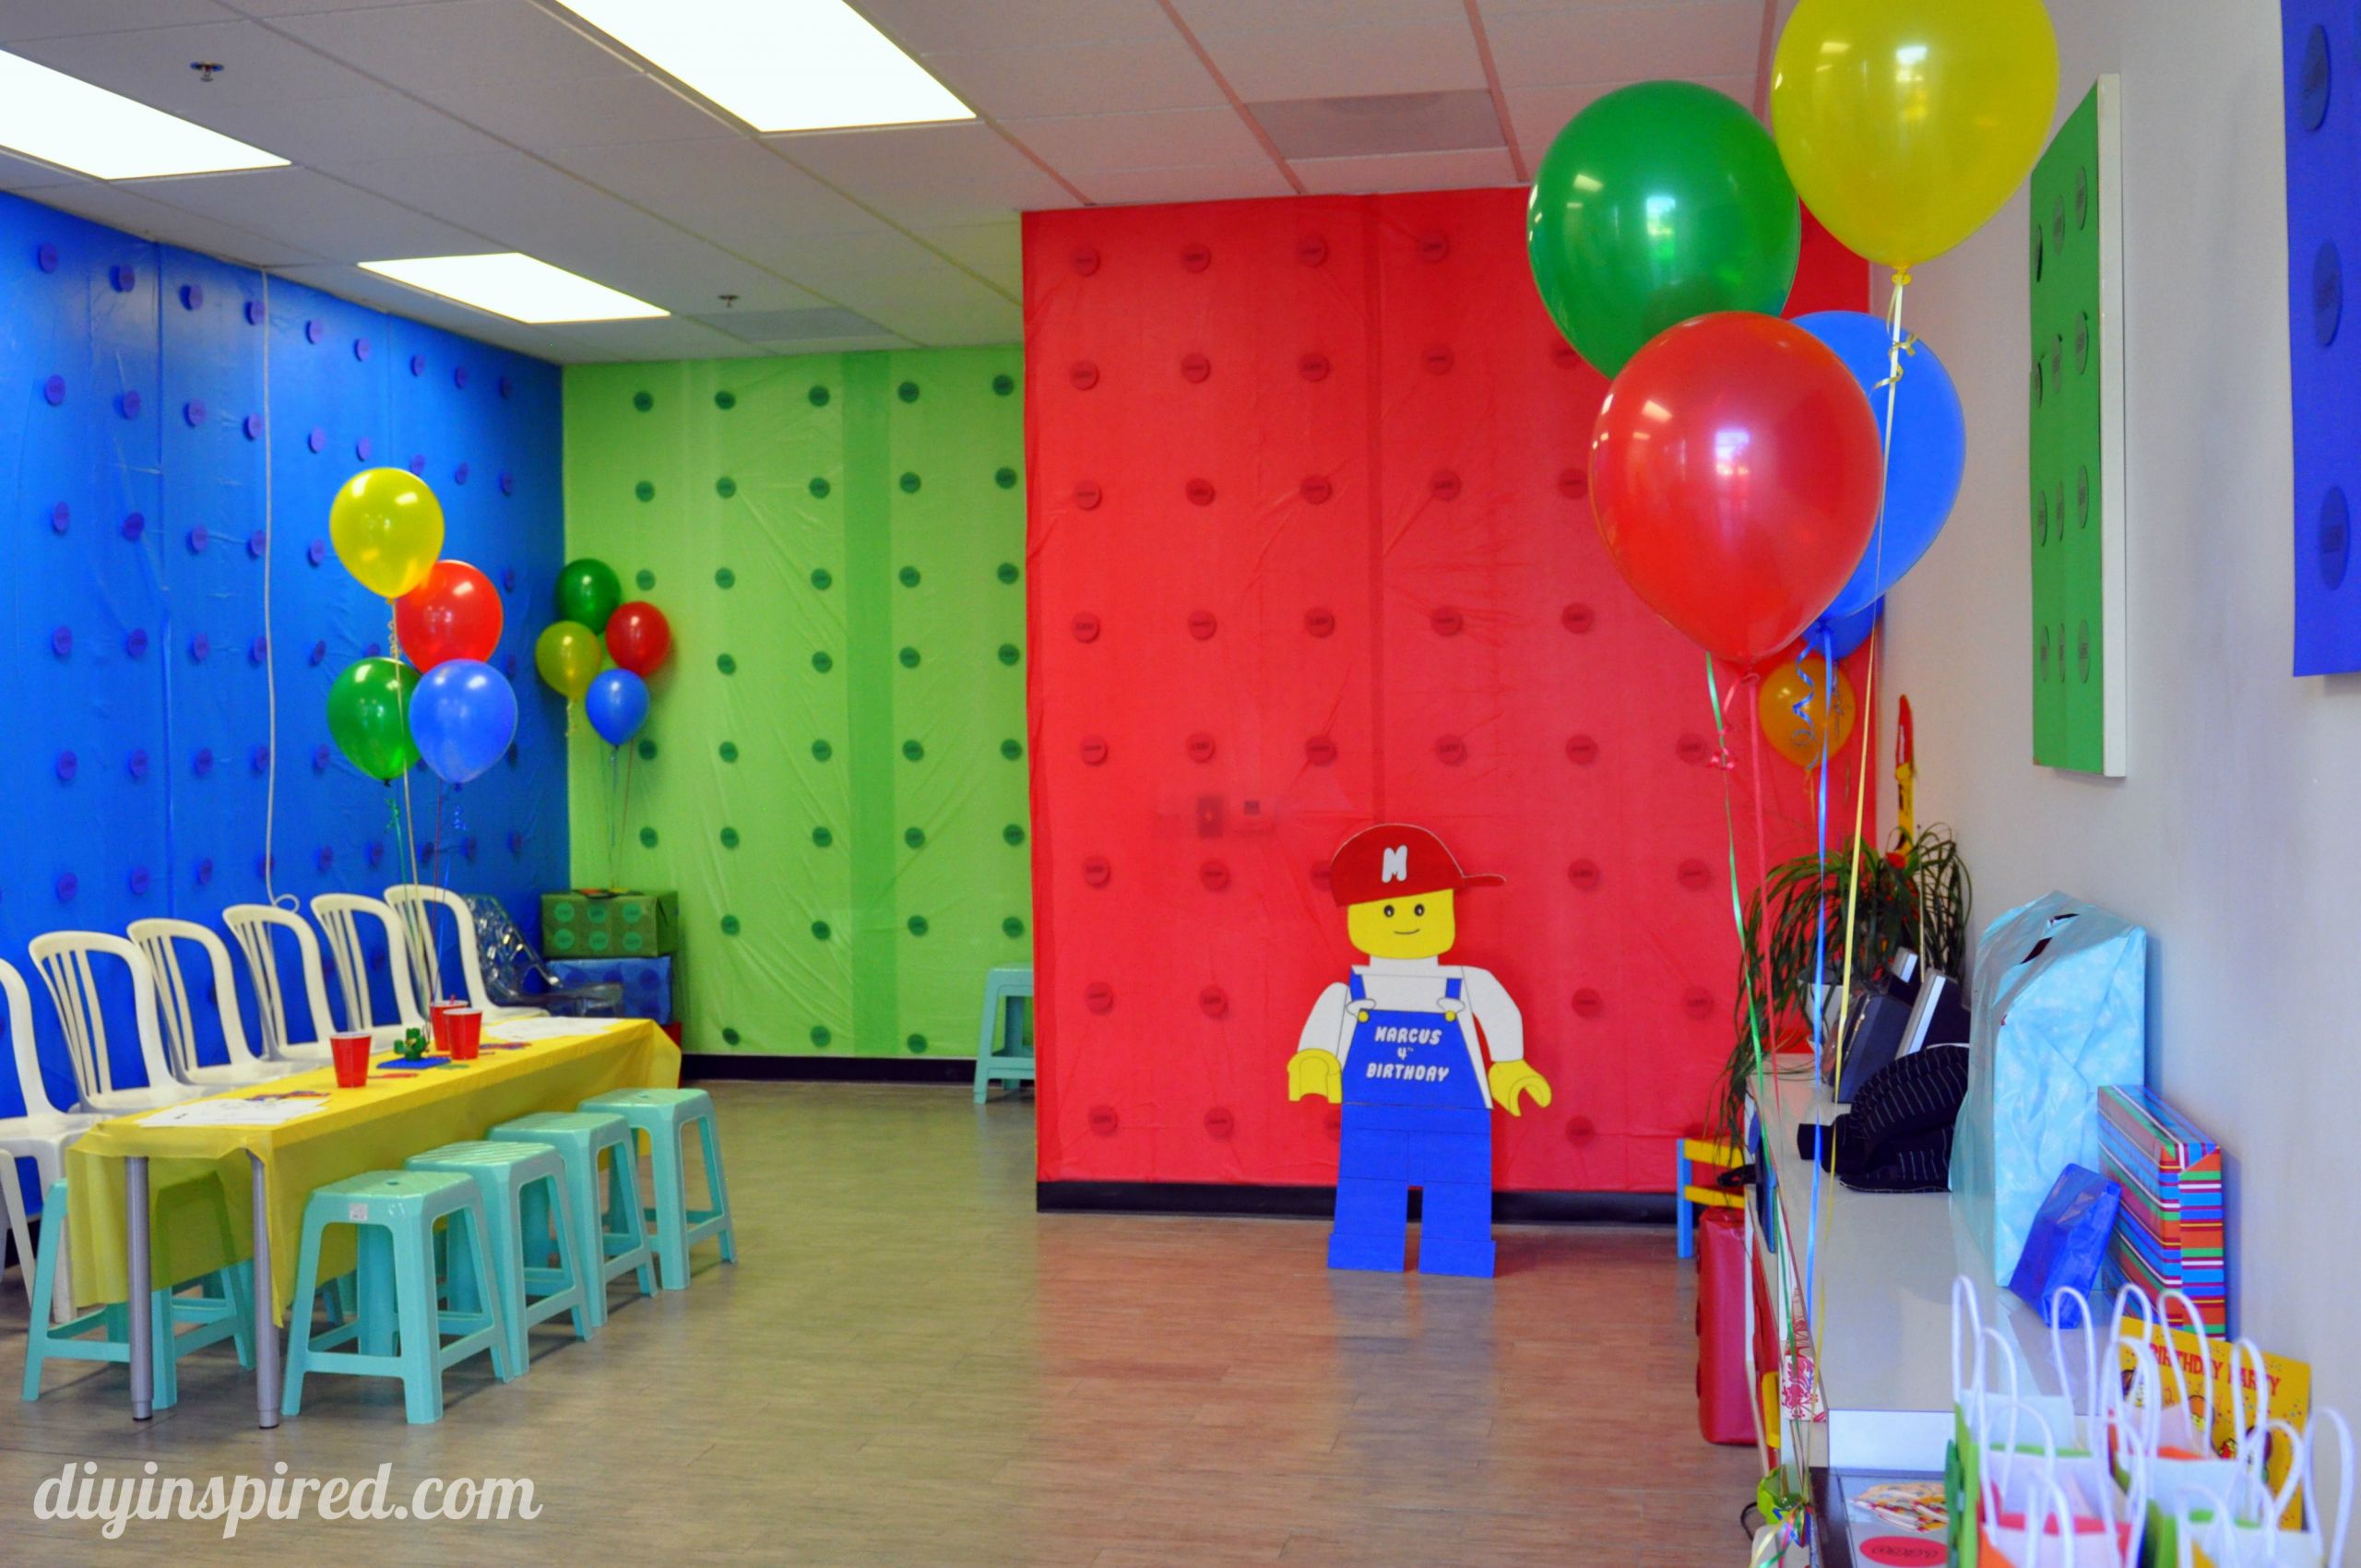 Lego Birthday Party Decorations
 Lego Birthday Party DIY Inspired